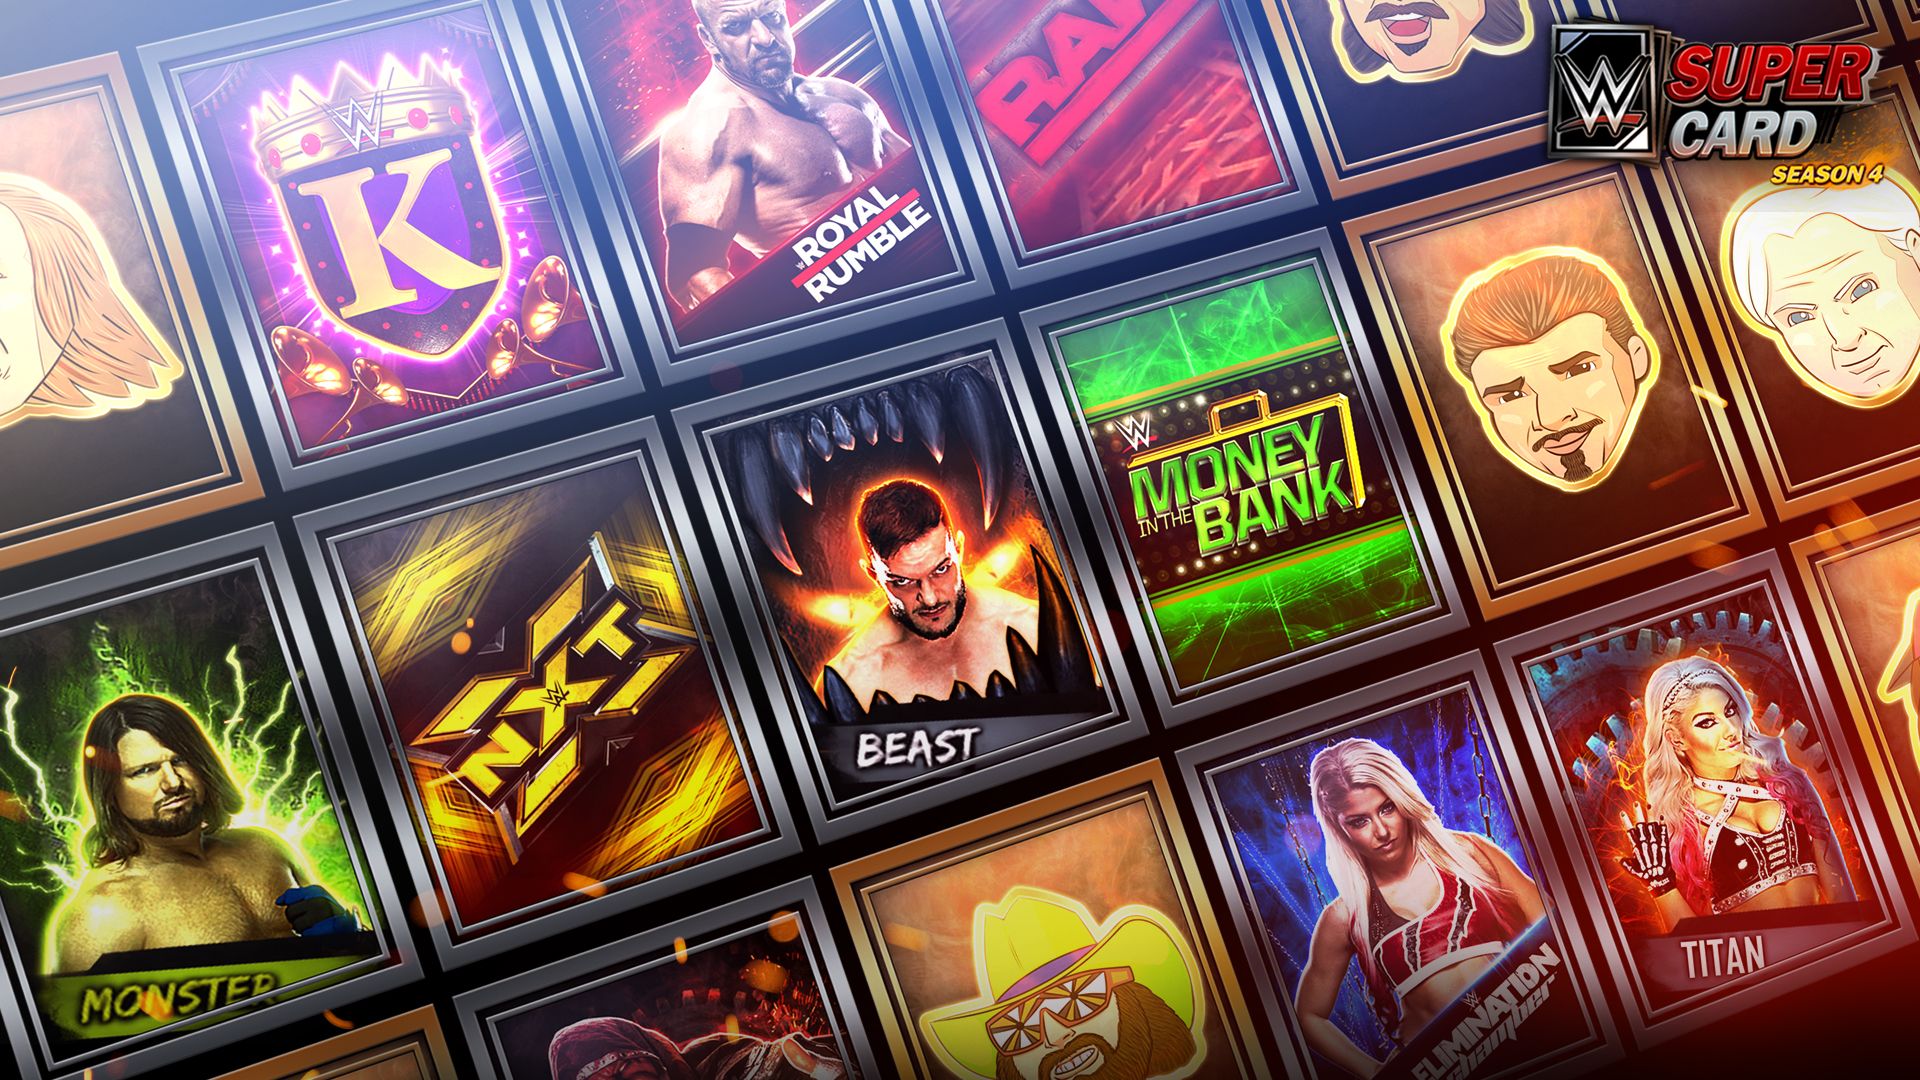 WWE SuperCard Season 4 Overview